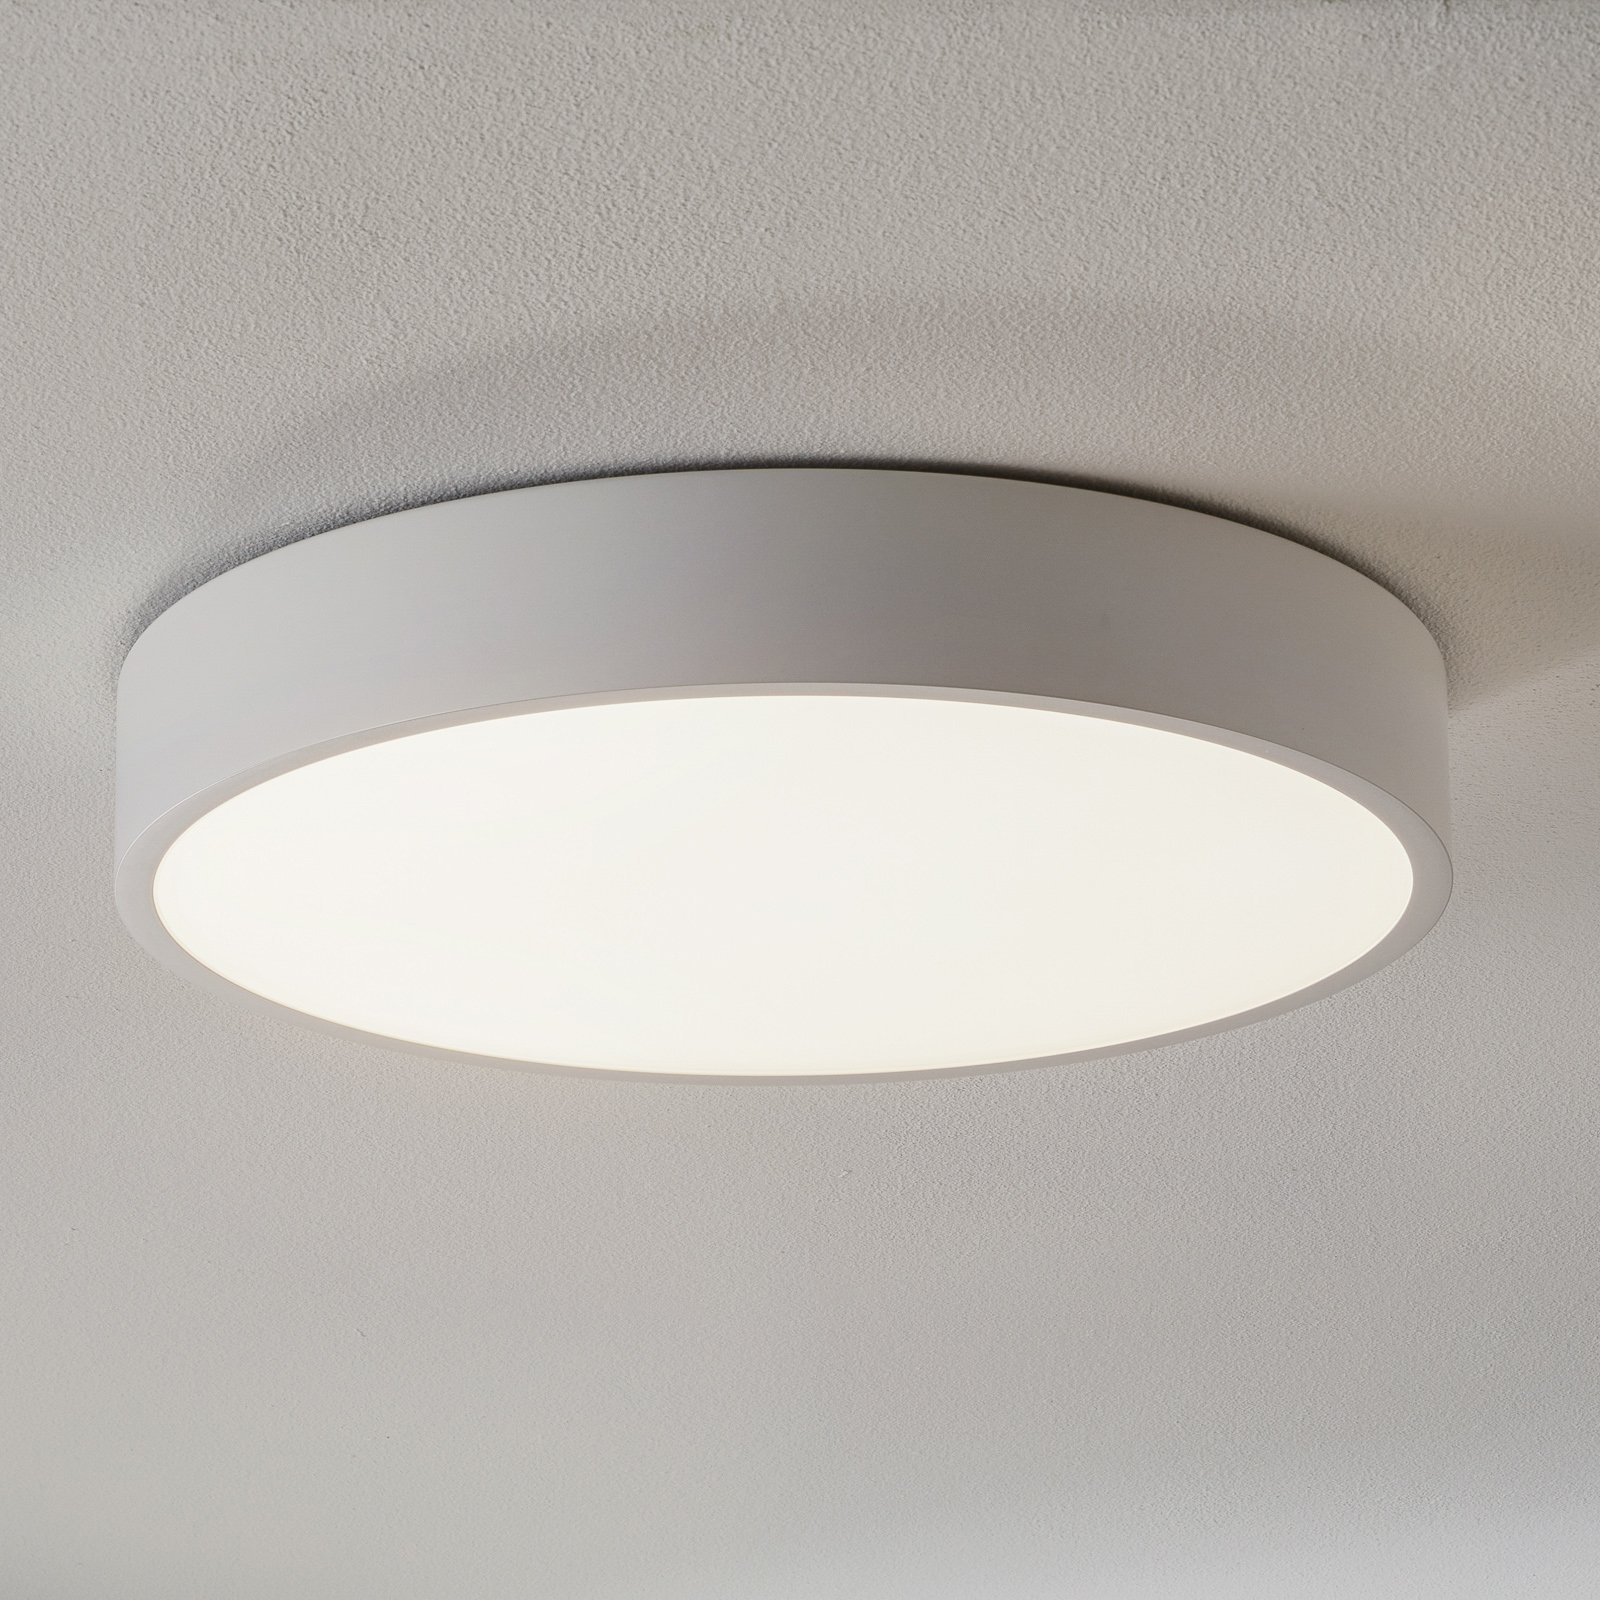 BEGA Planeta ceiling lamp DALI 4,000K white Ø 50cm